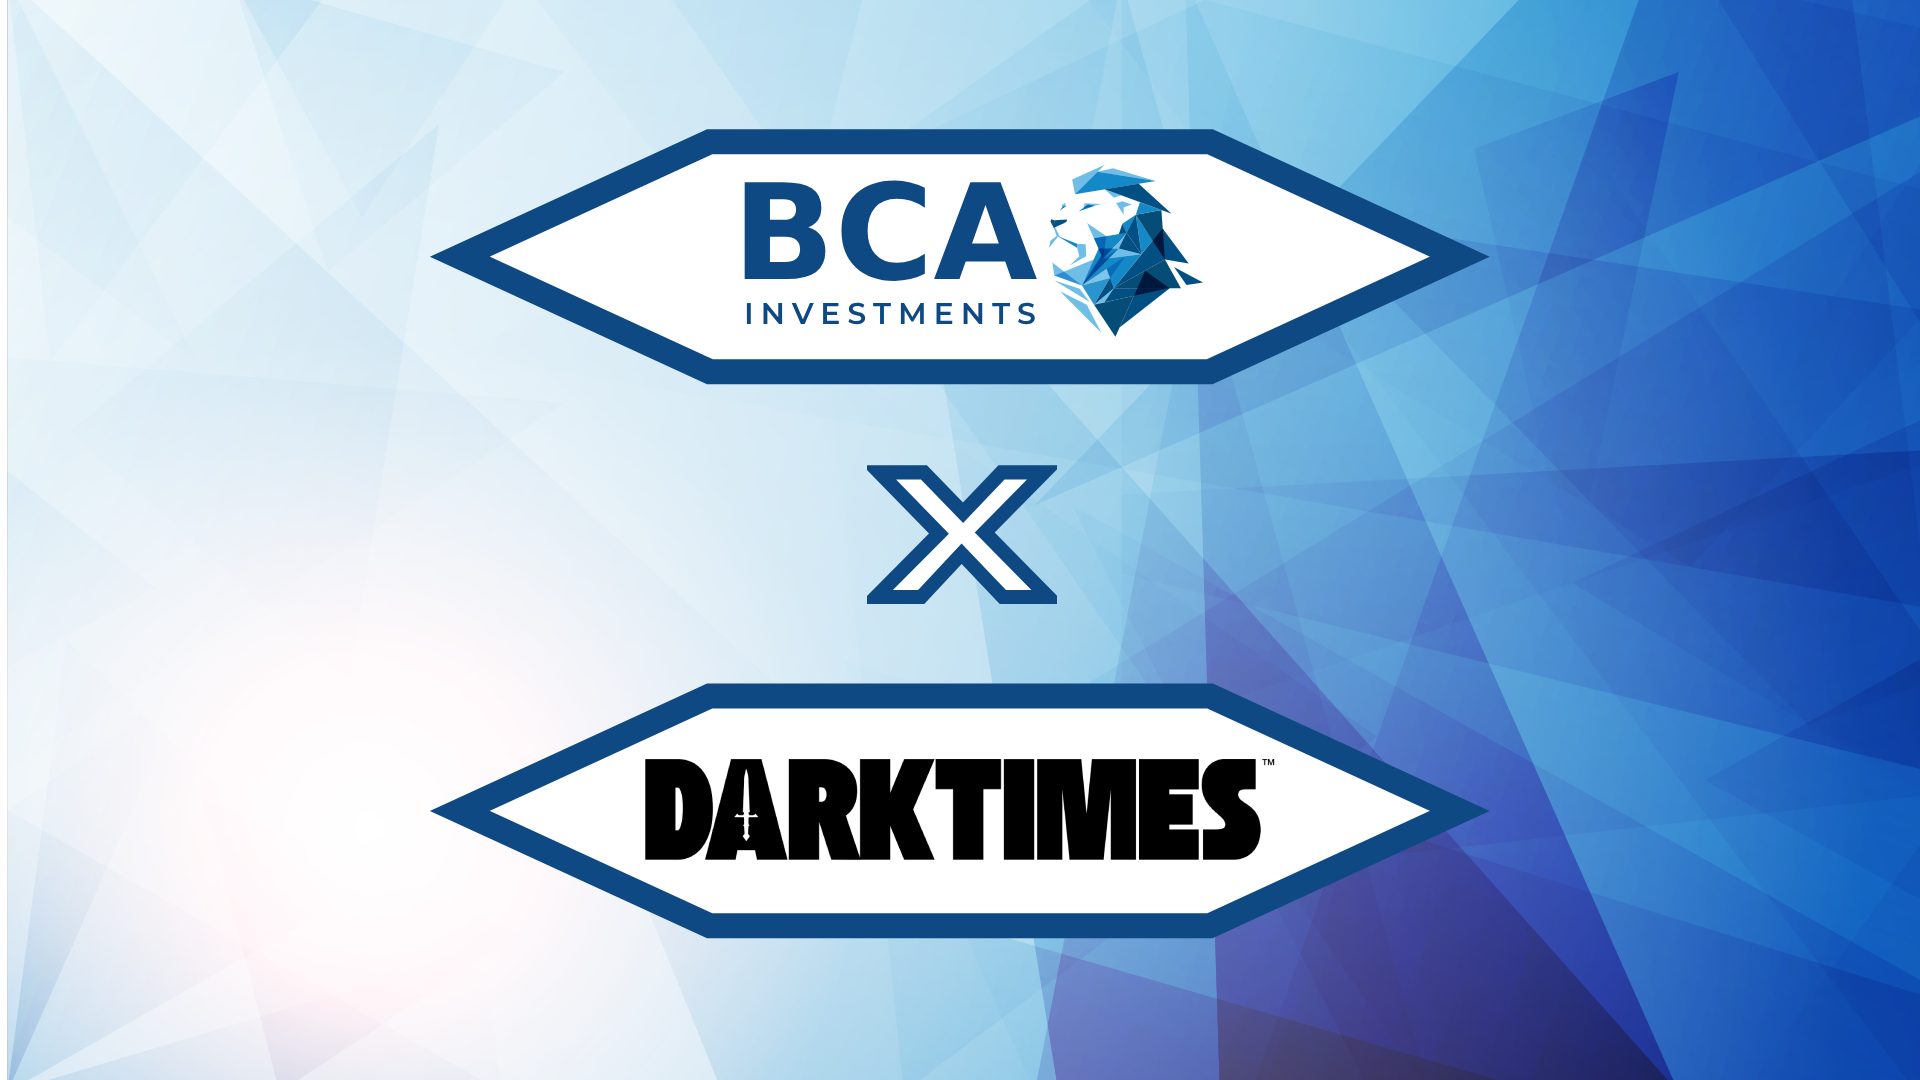 Partnership: DARKTIMES x BCA investments